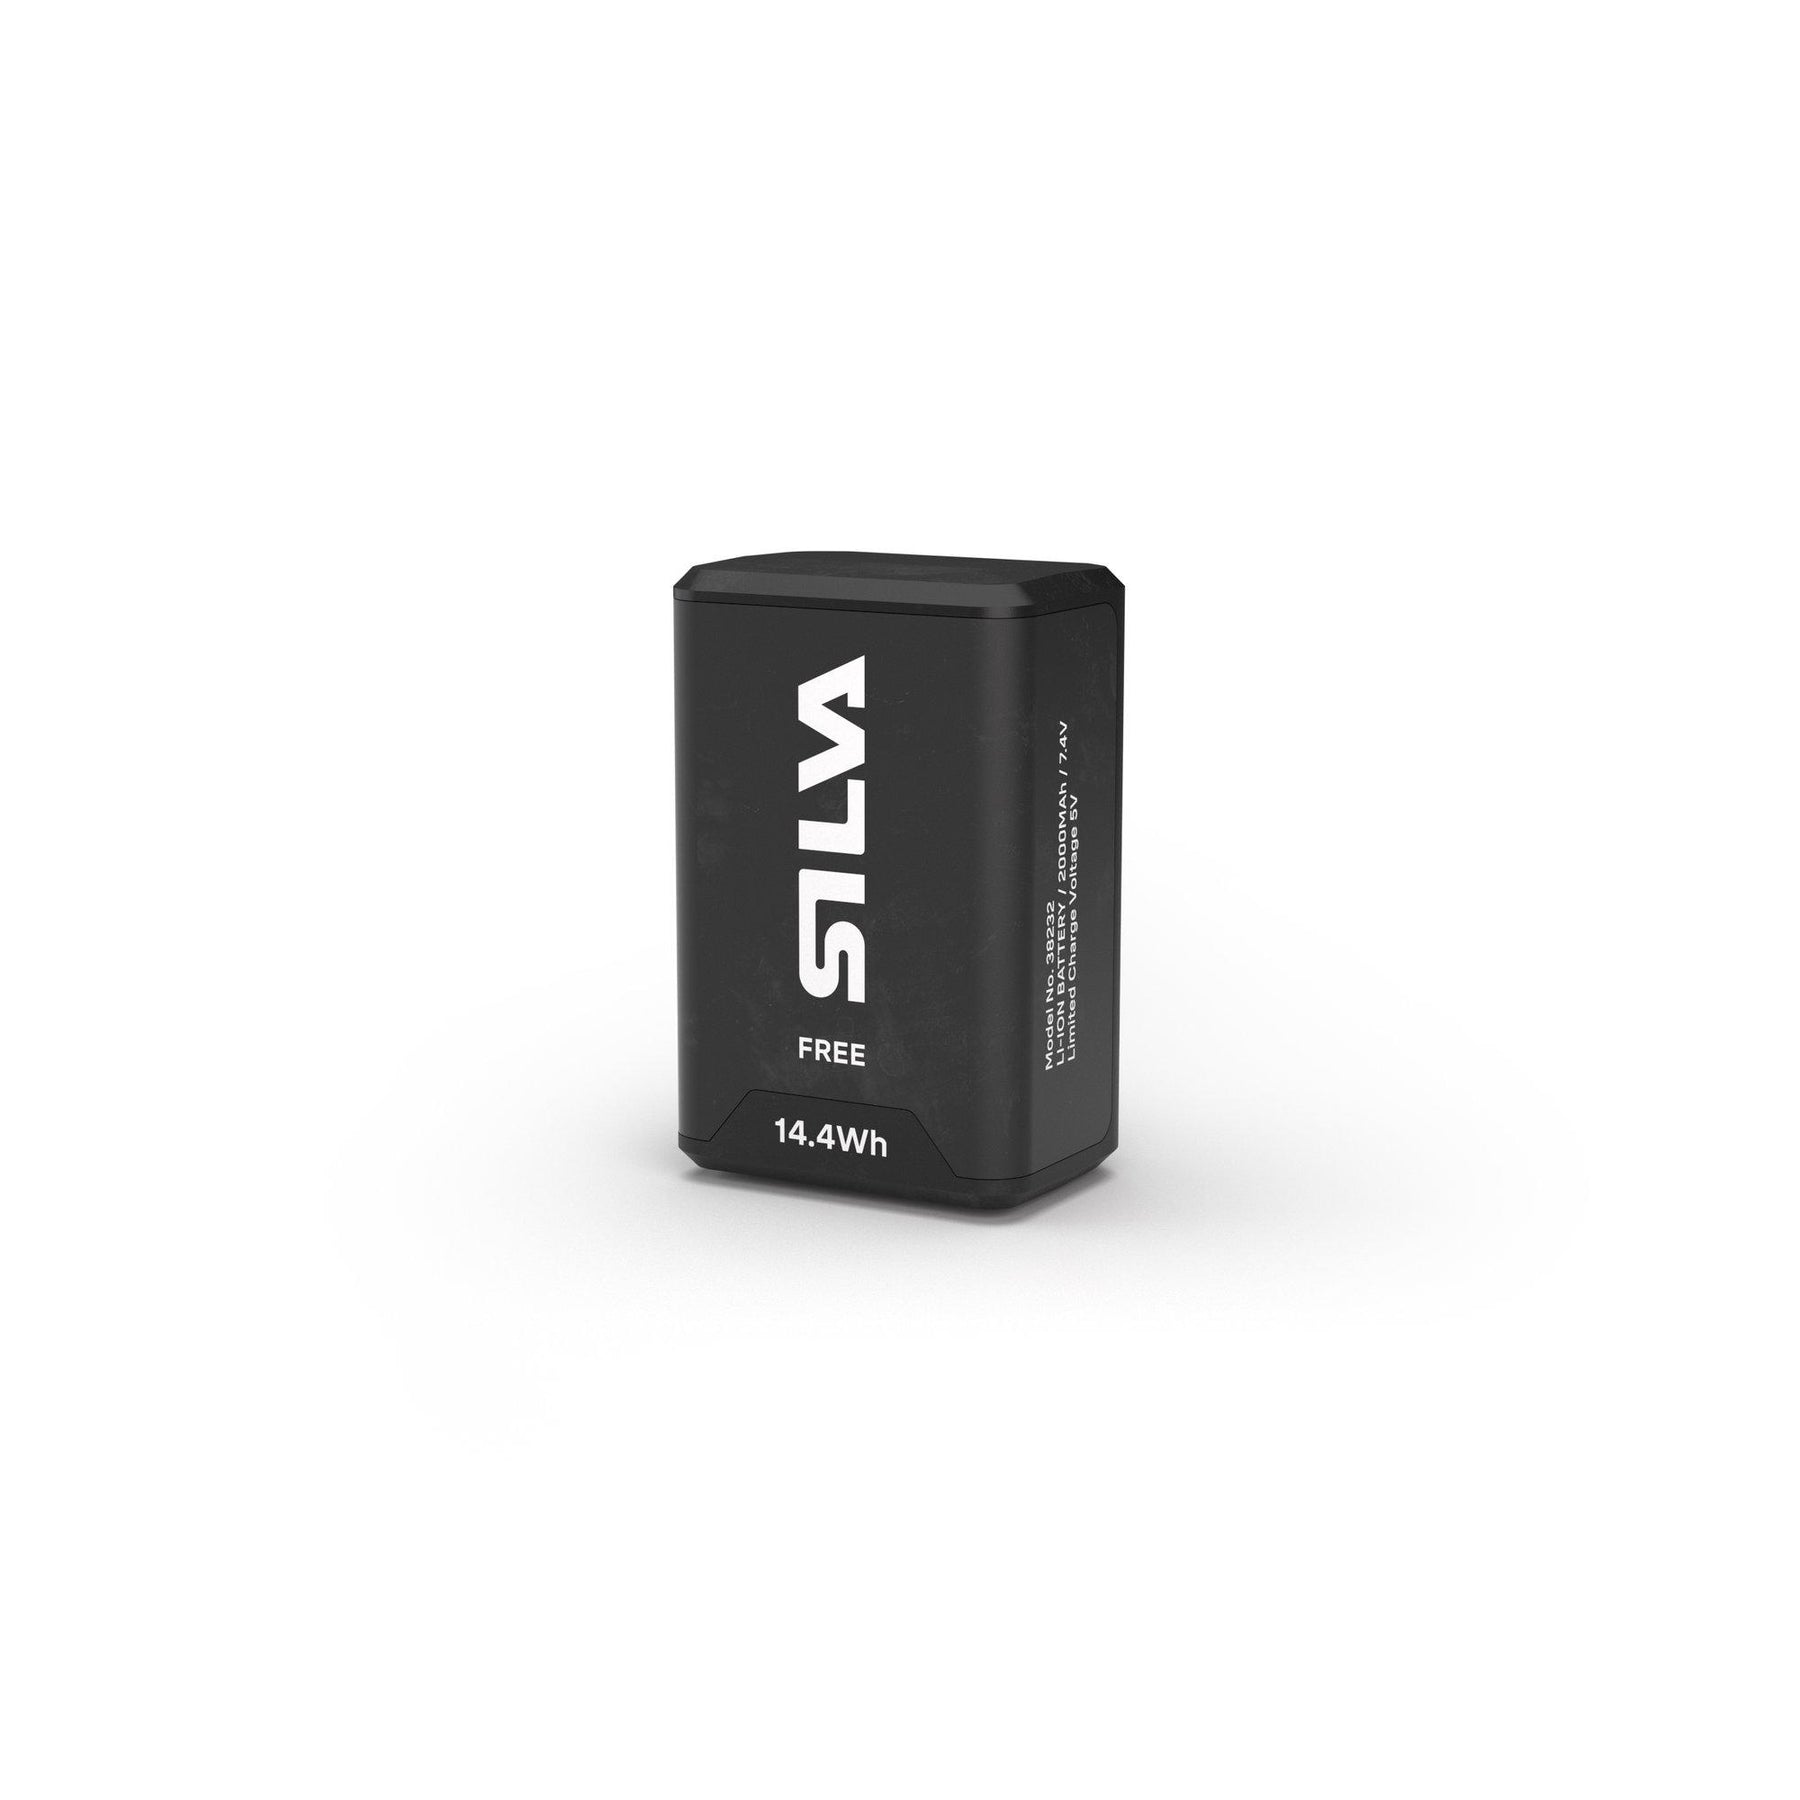 Se Silva Free Headlamp Battery 14.4wh (2.0ah) - Batteri hos RejseGear.dk